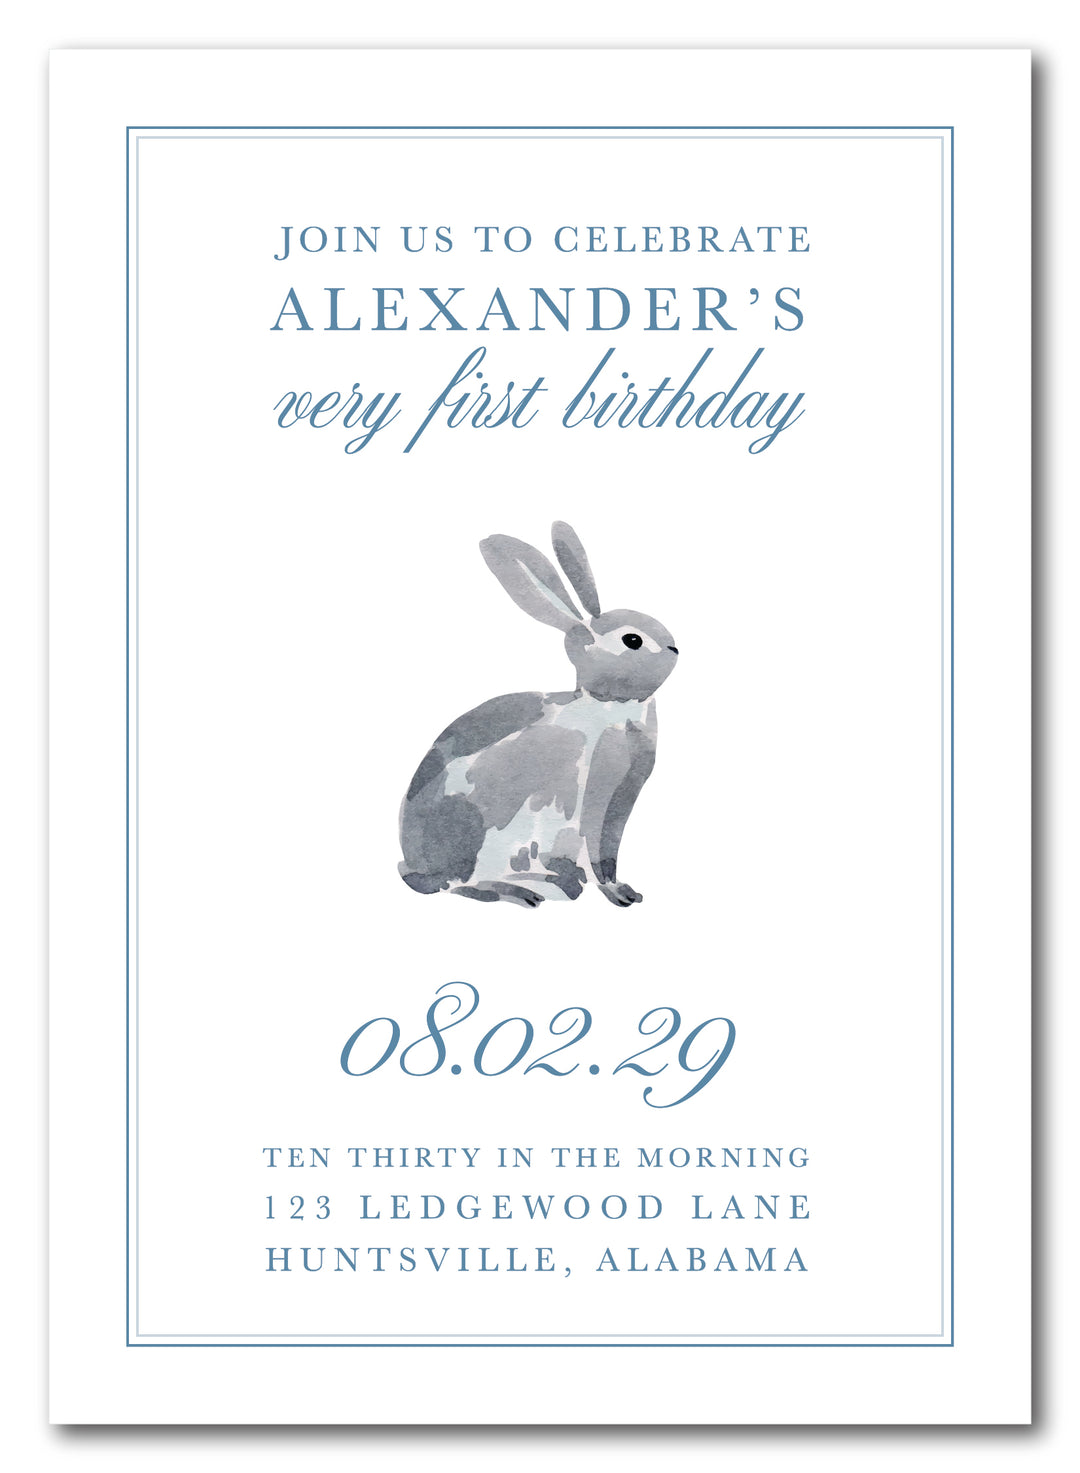 The Rabbit Birthday Party Invitation